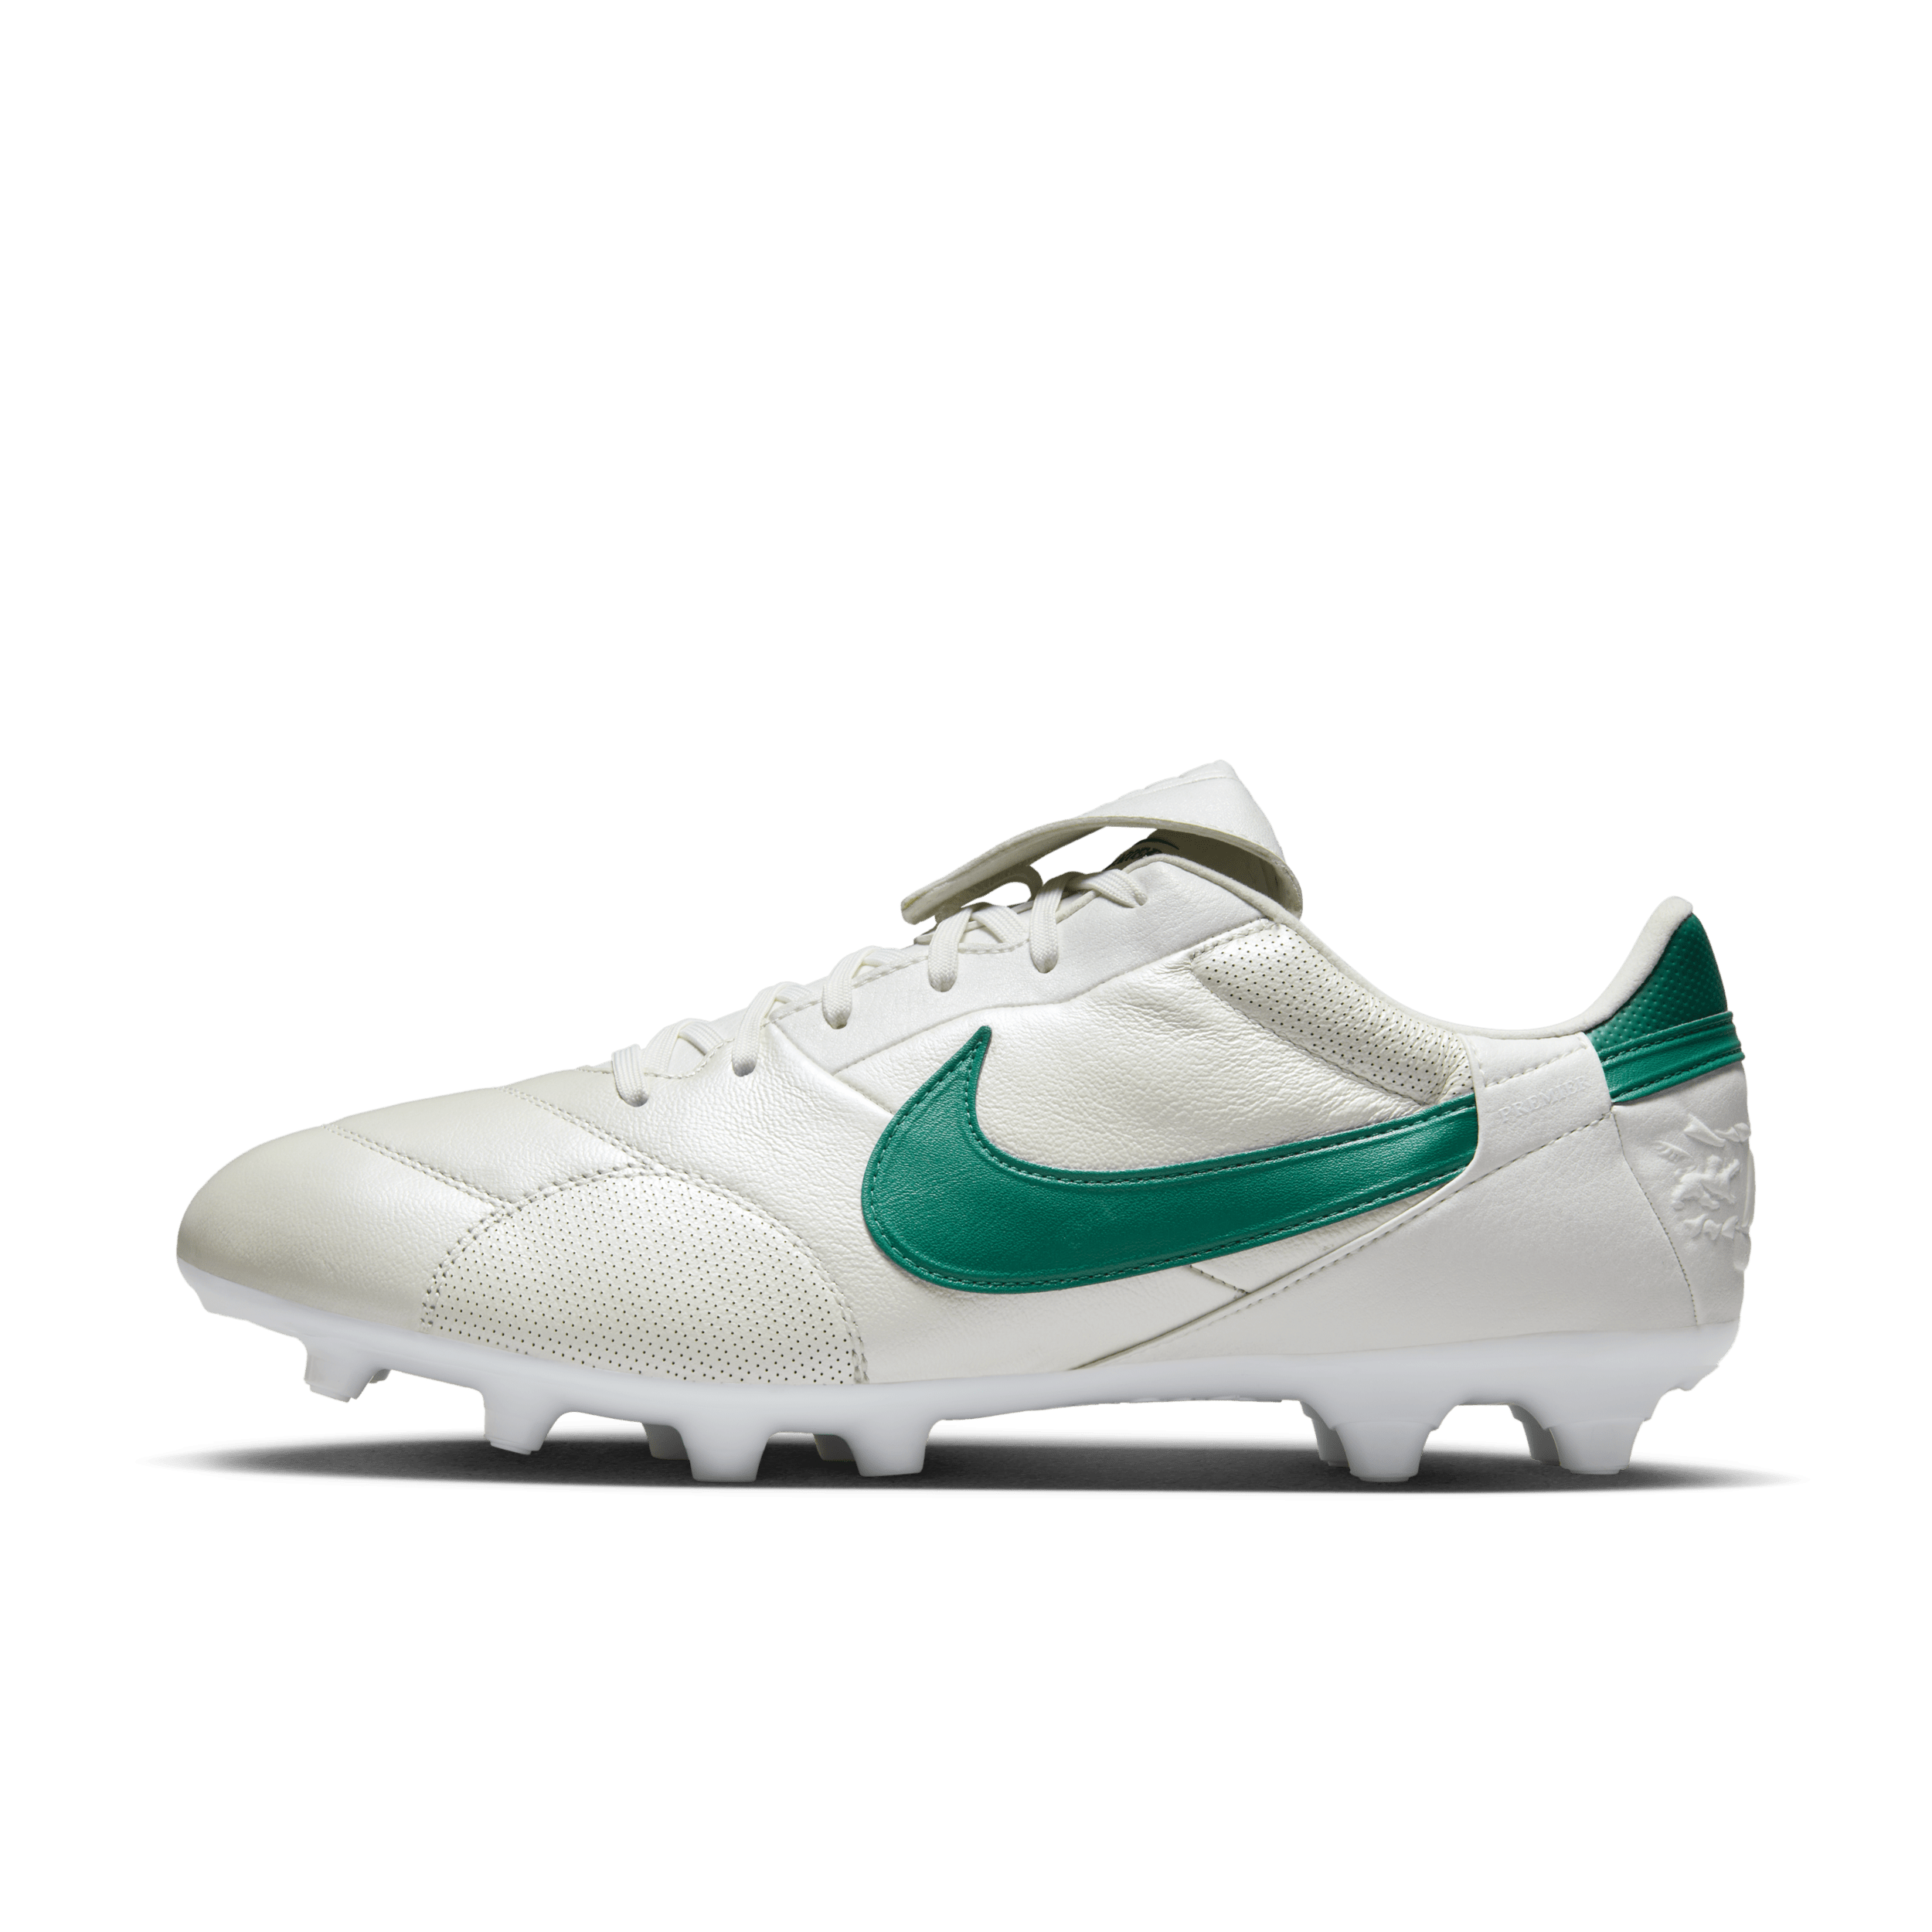 Nike Premier 3 low top voetbalschoenen (stevige ondergrond) - Wit